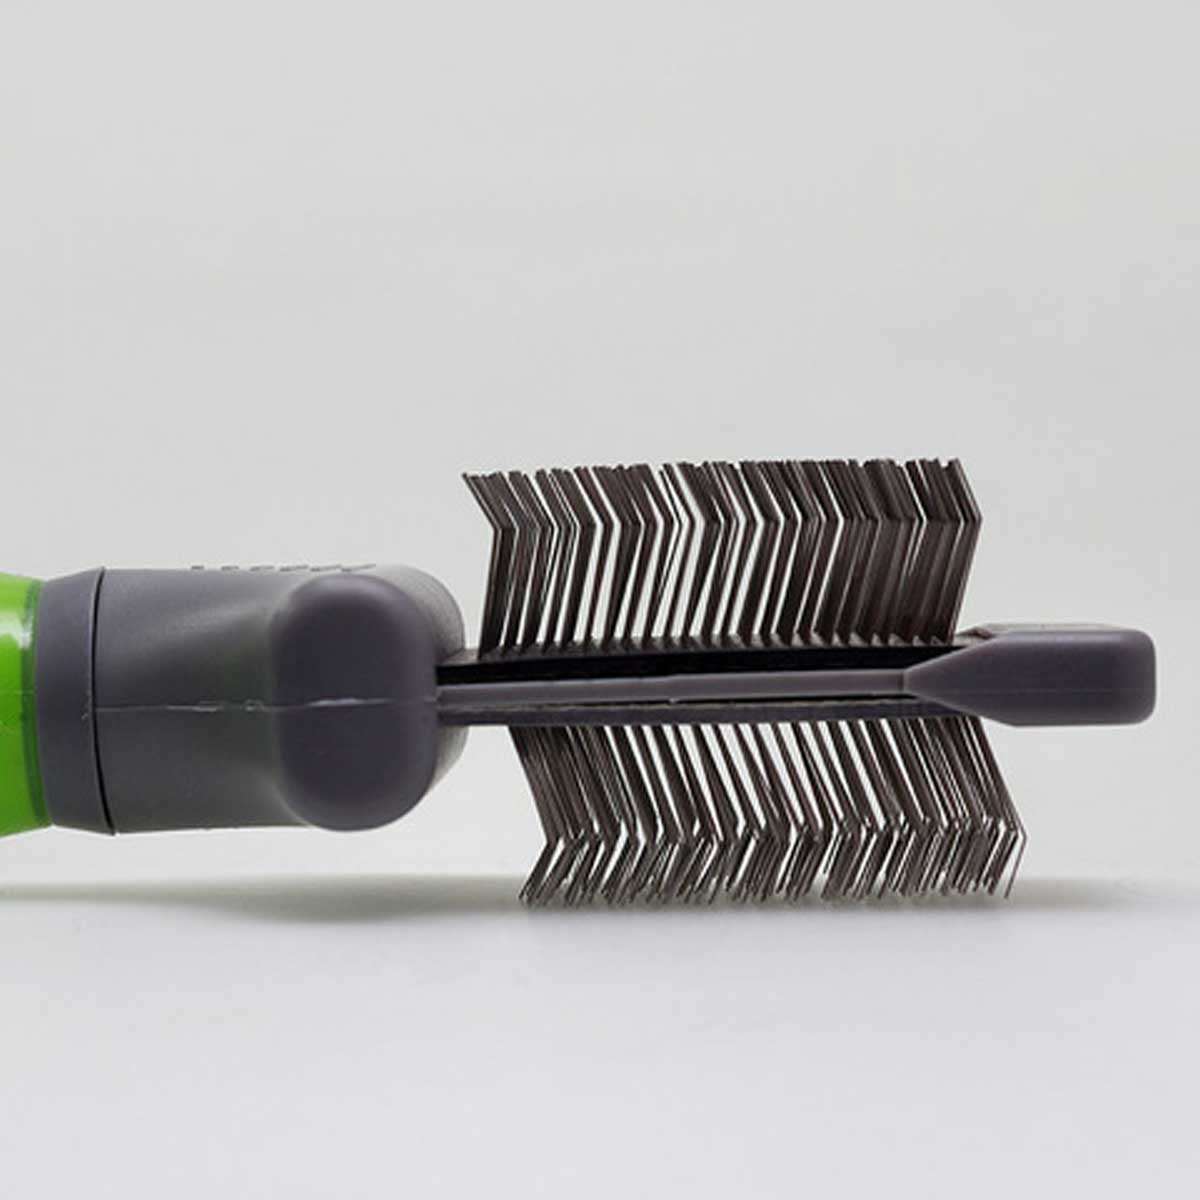 Moser slicker brush premium with gel handle